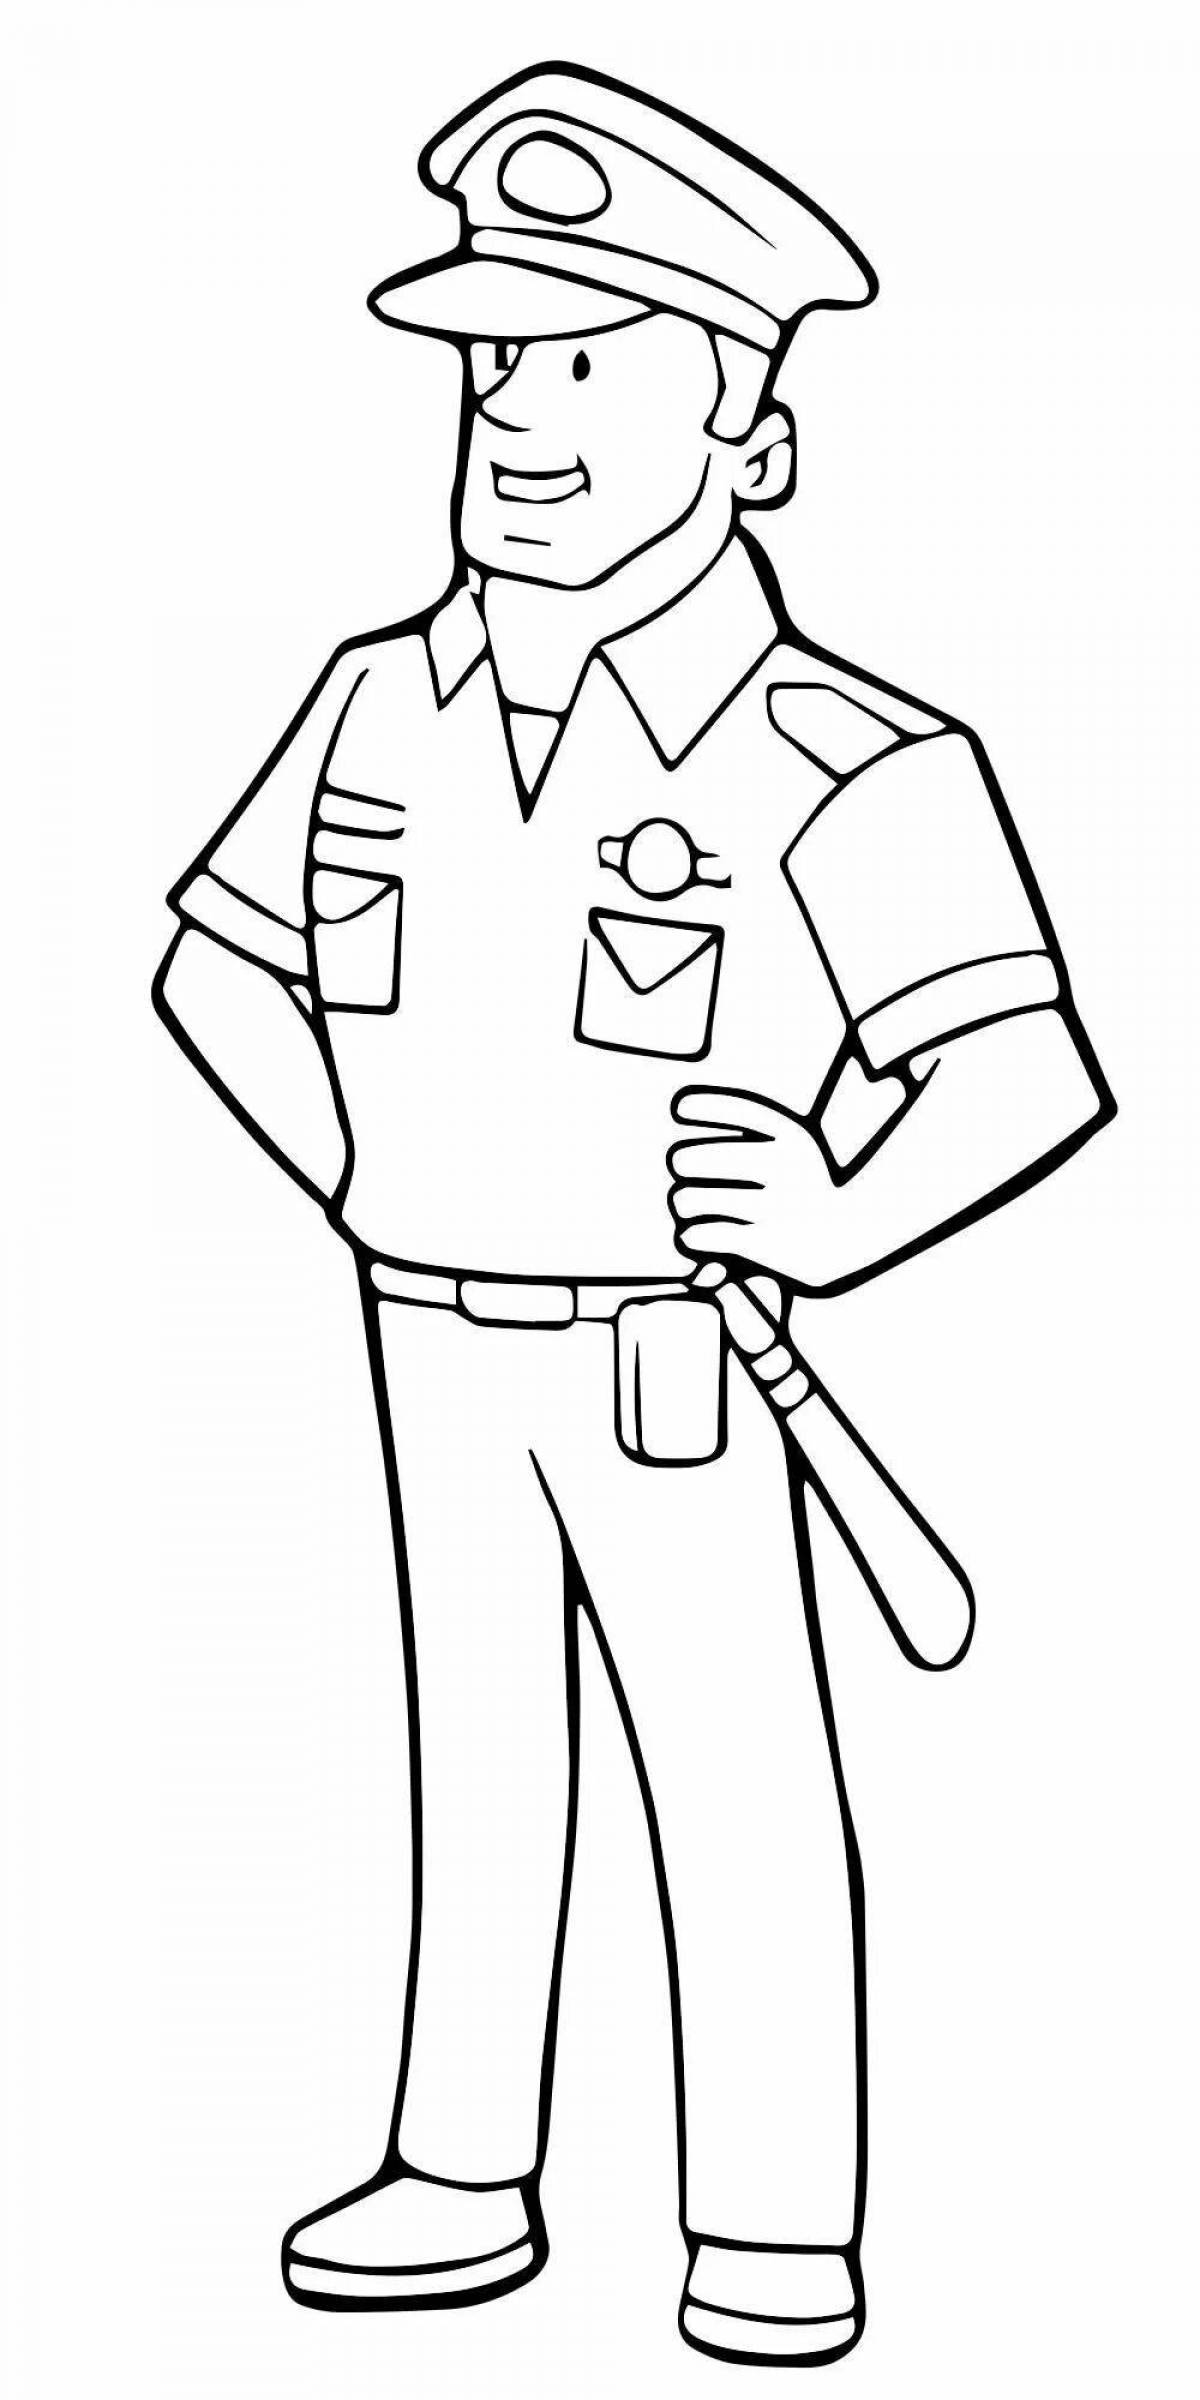 Joyful policeman coloring page